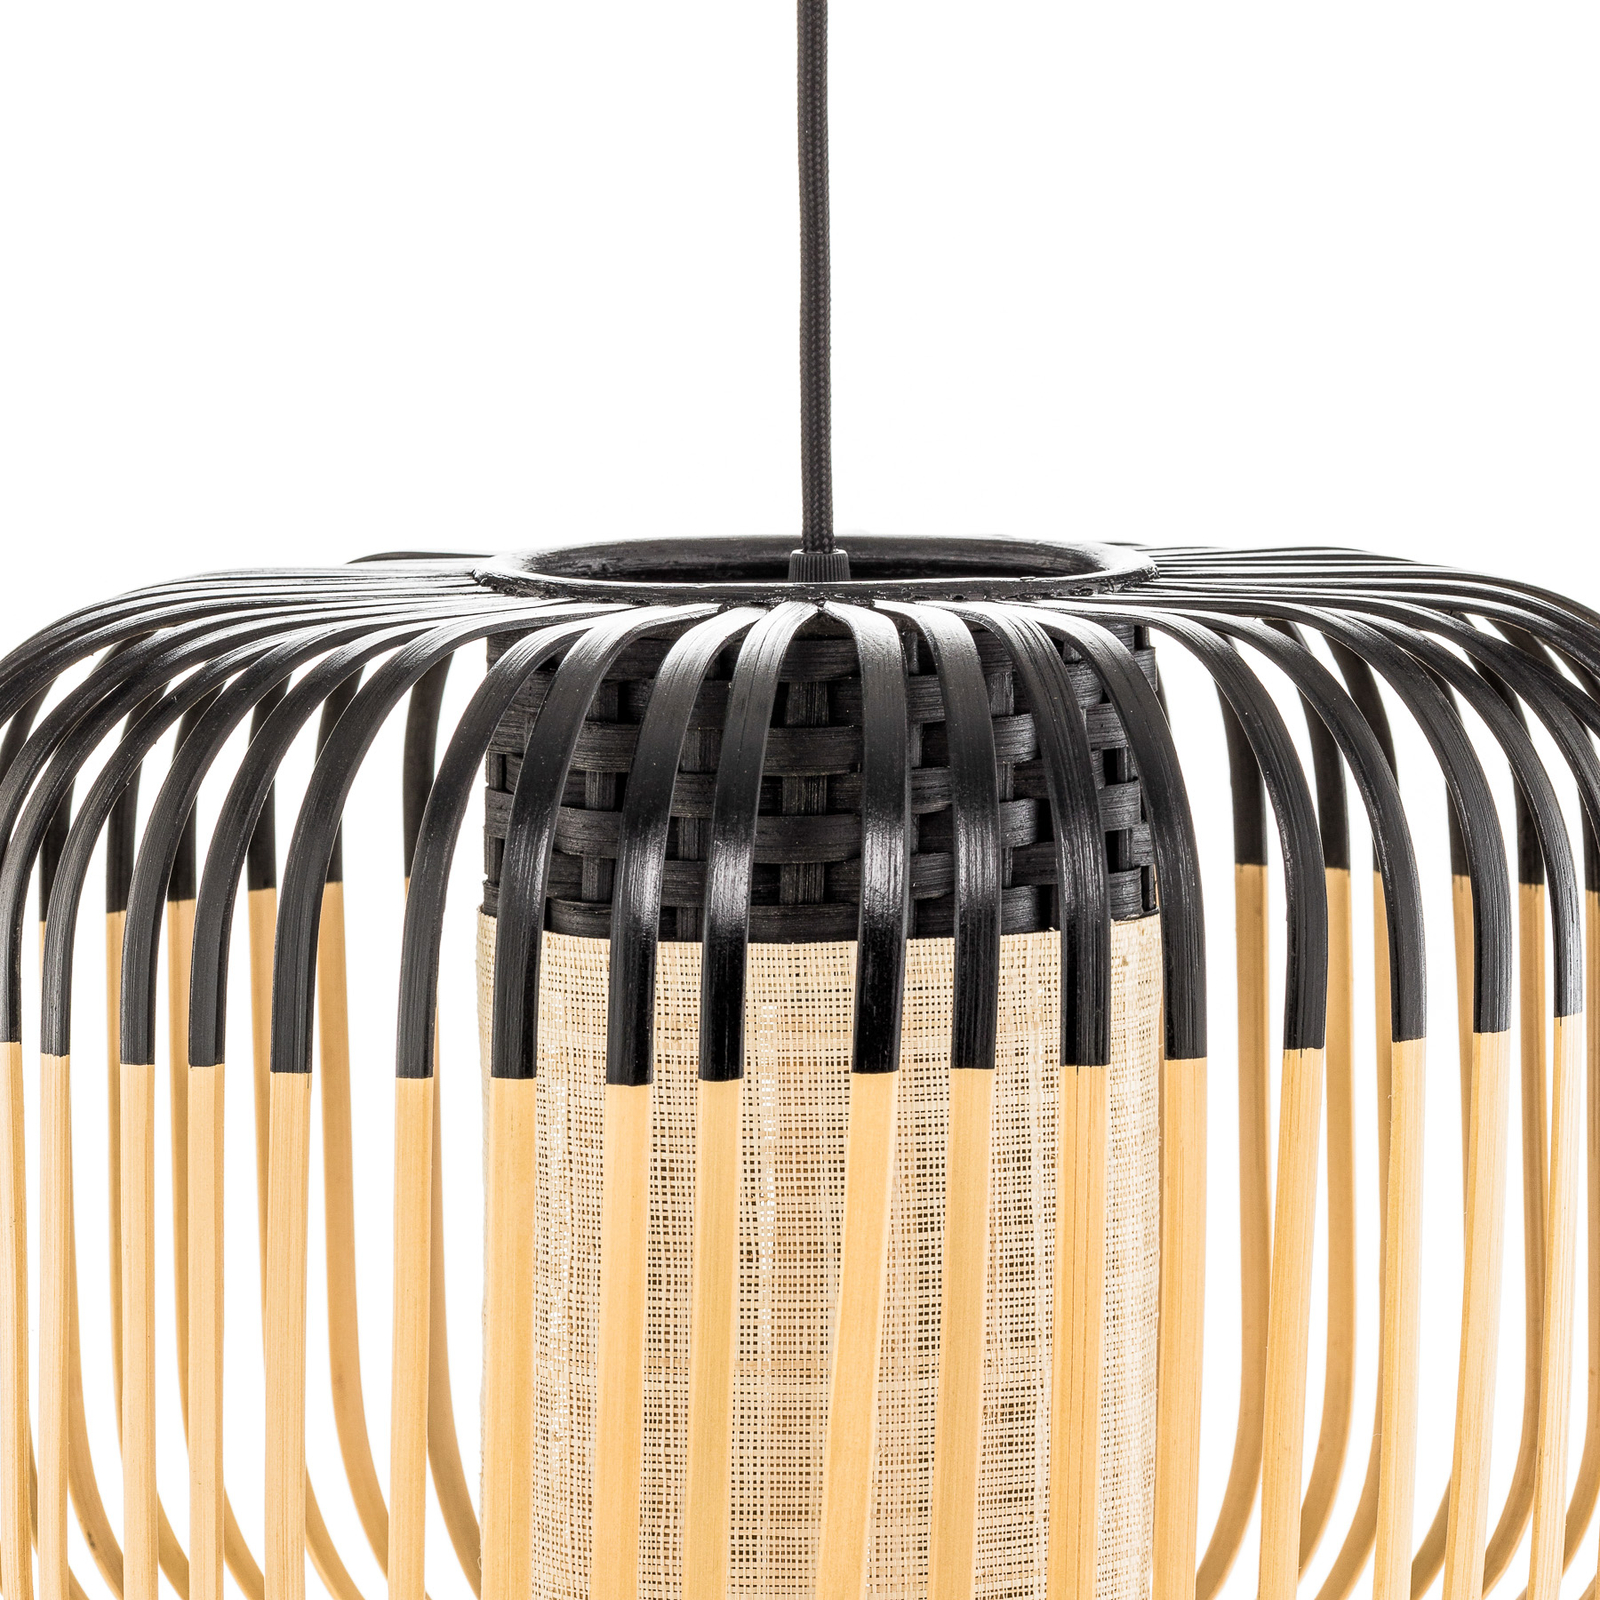 Forestier Bamboo Light S lampa wisząca 35cm czarna